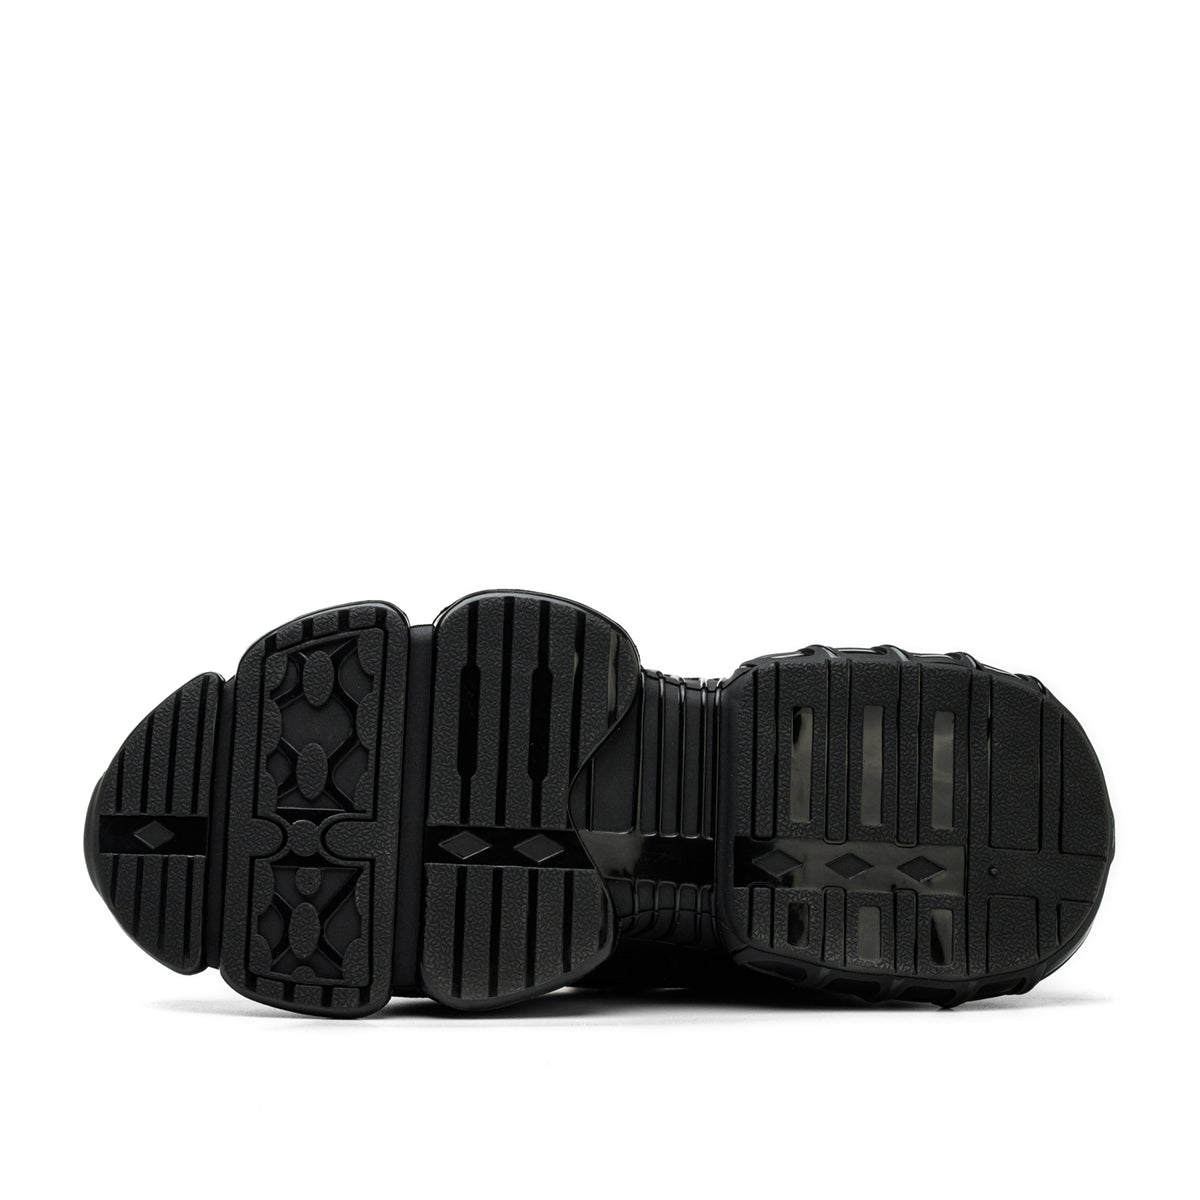 Protex Black - Indestructible Shoes